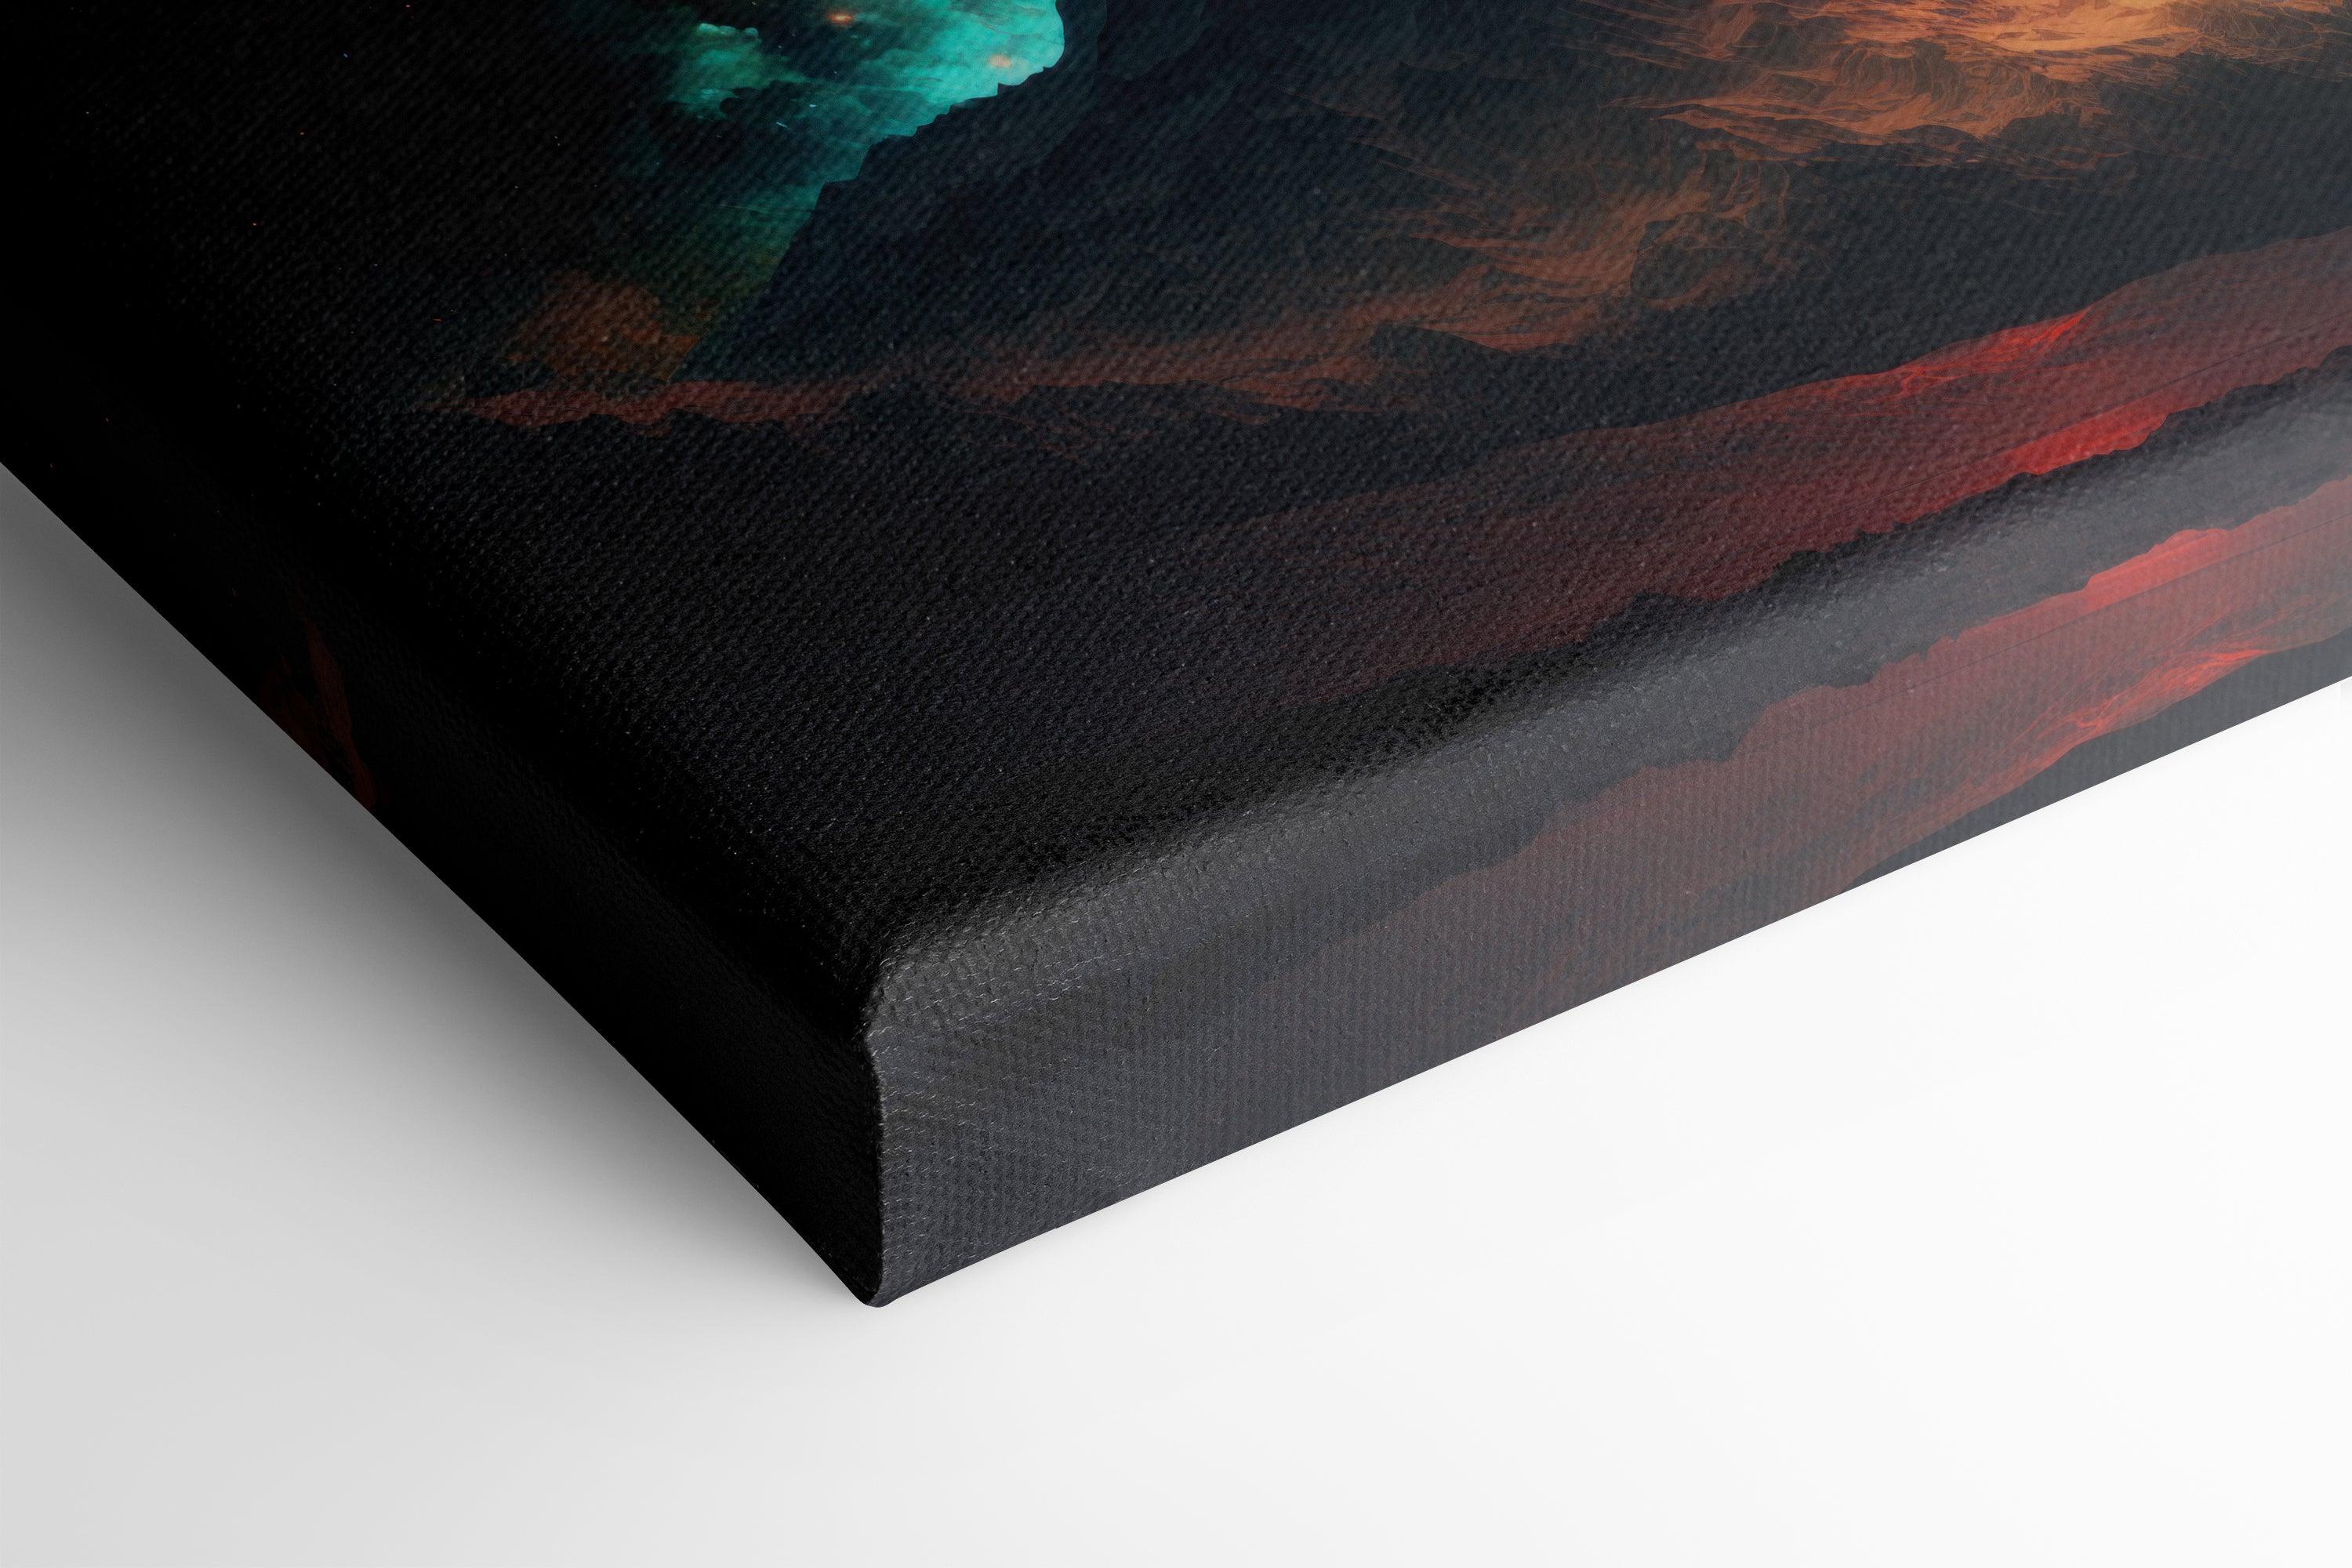 Night Landscape Under Radiant Aurora - Canvas Print - Artoholica Ready to Hang Canvas Print